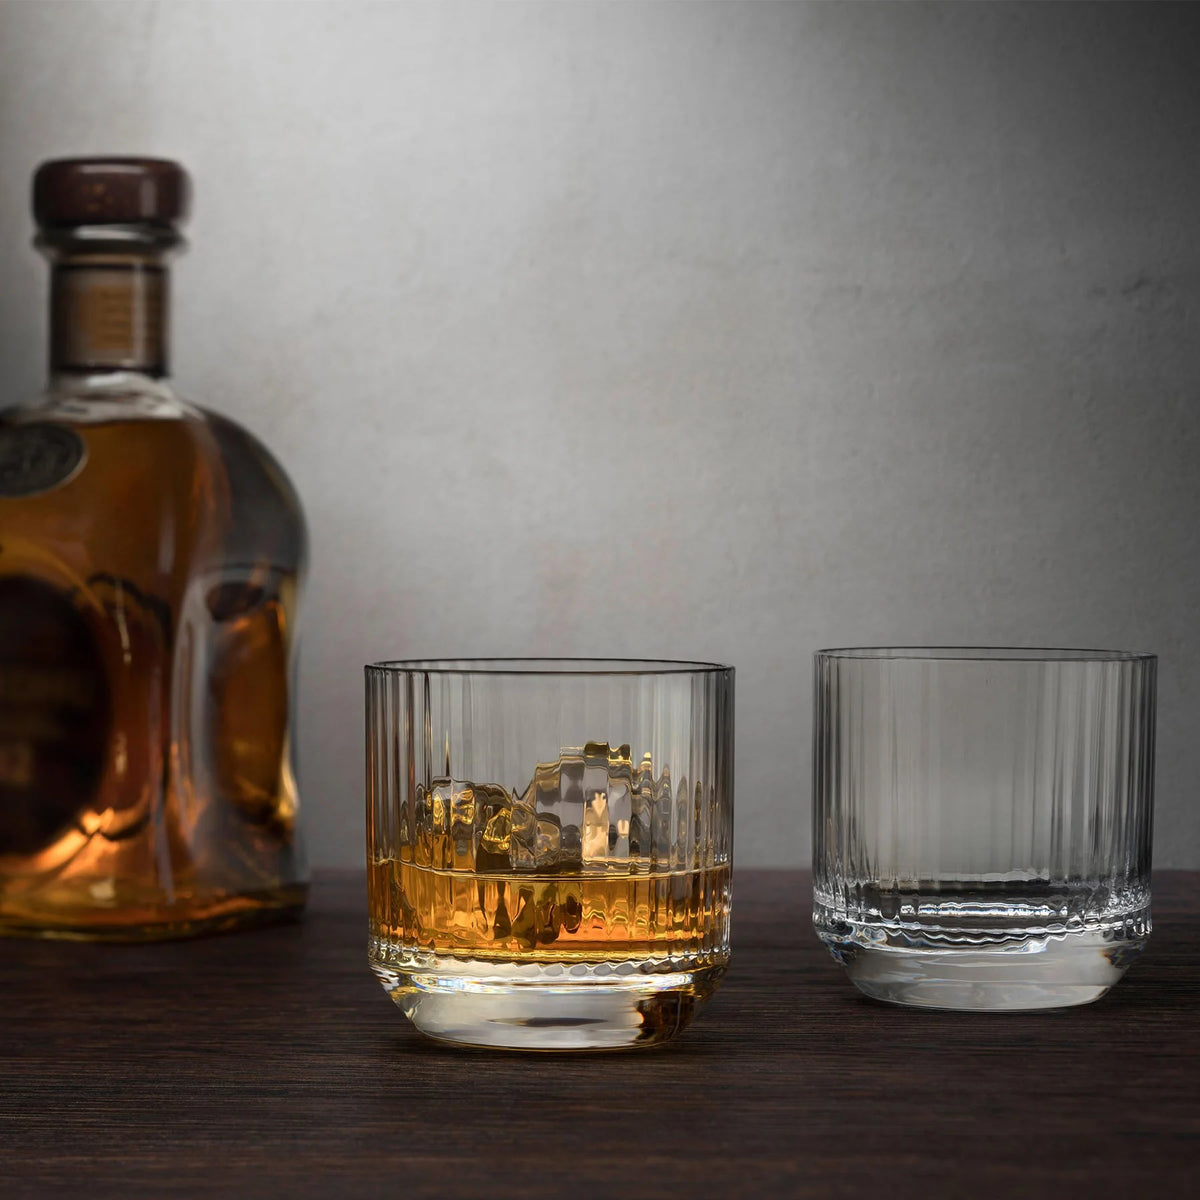 Big Top DOF & Whiskey Glass Set of 4